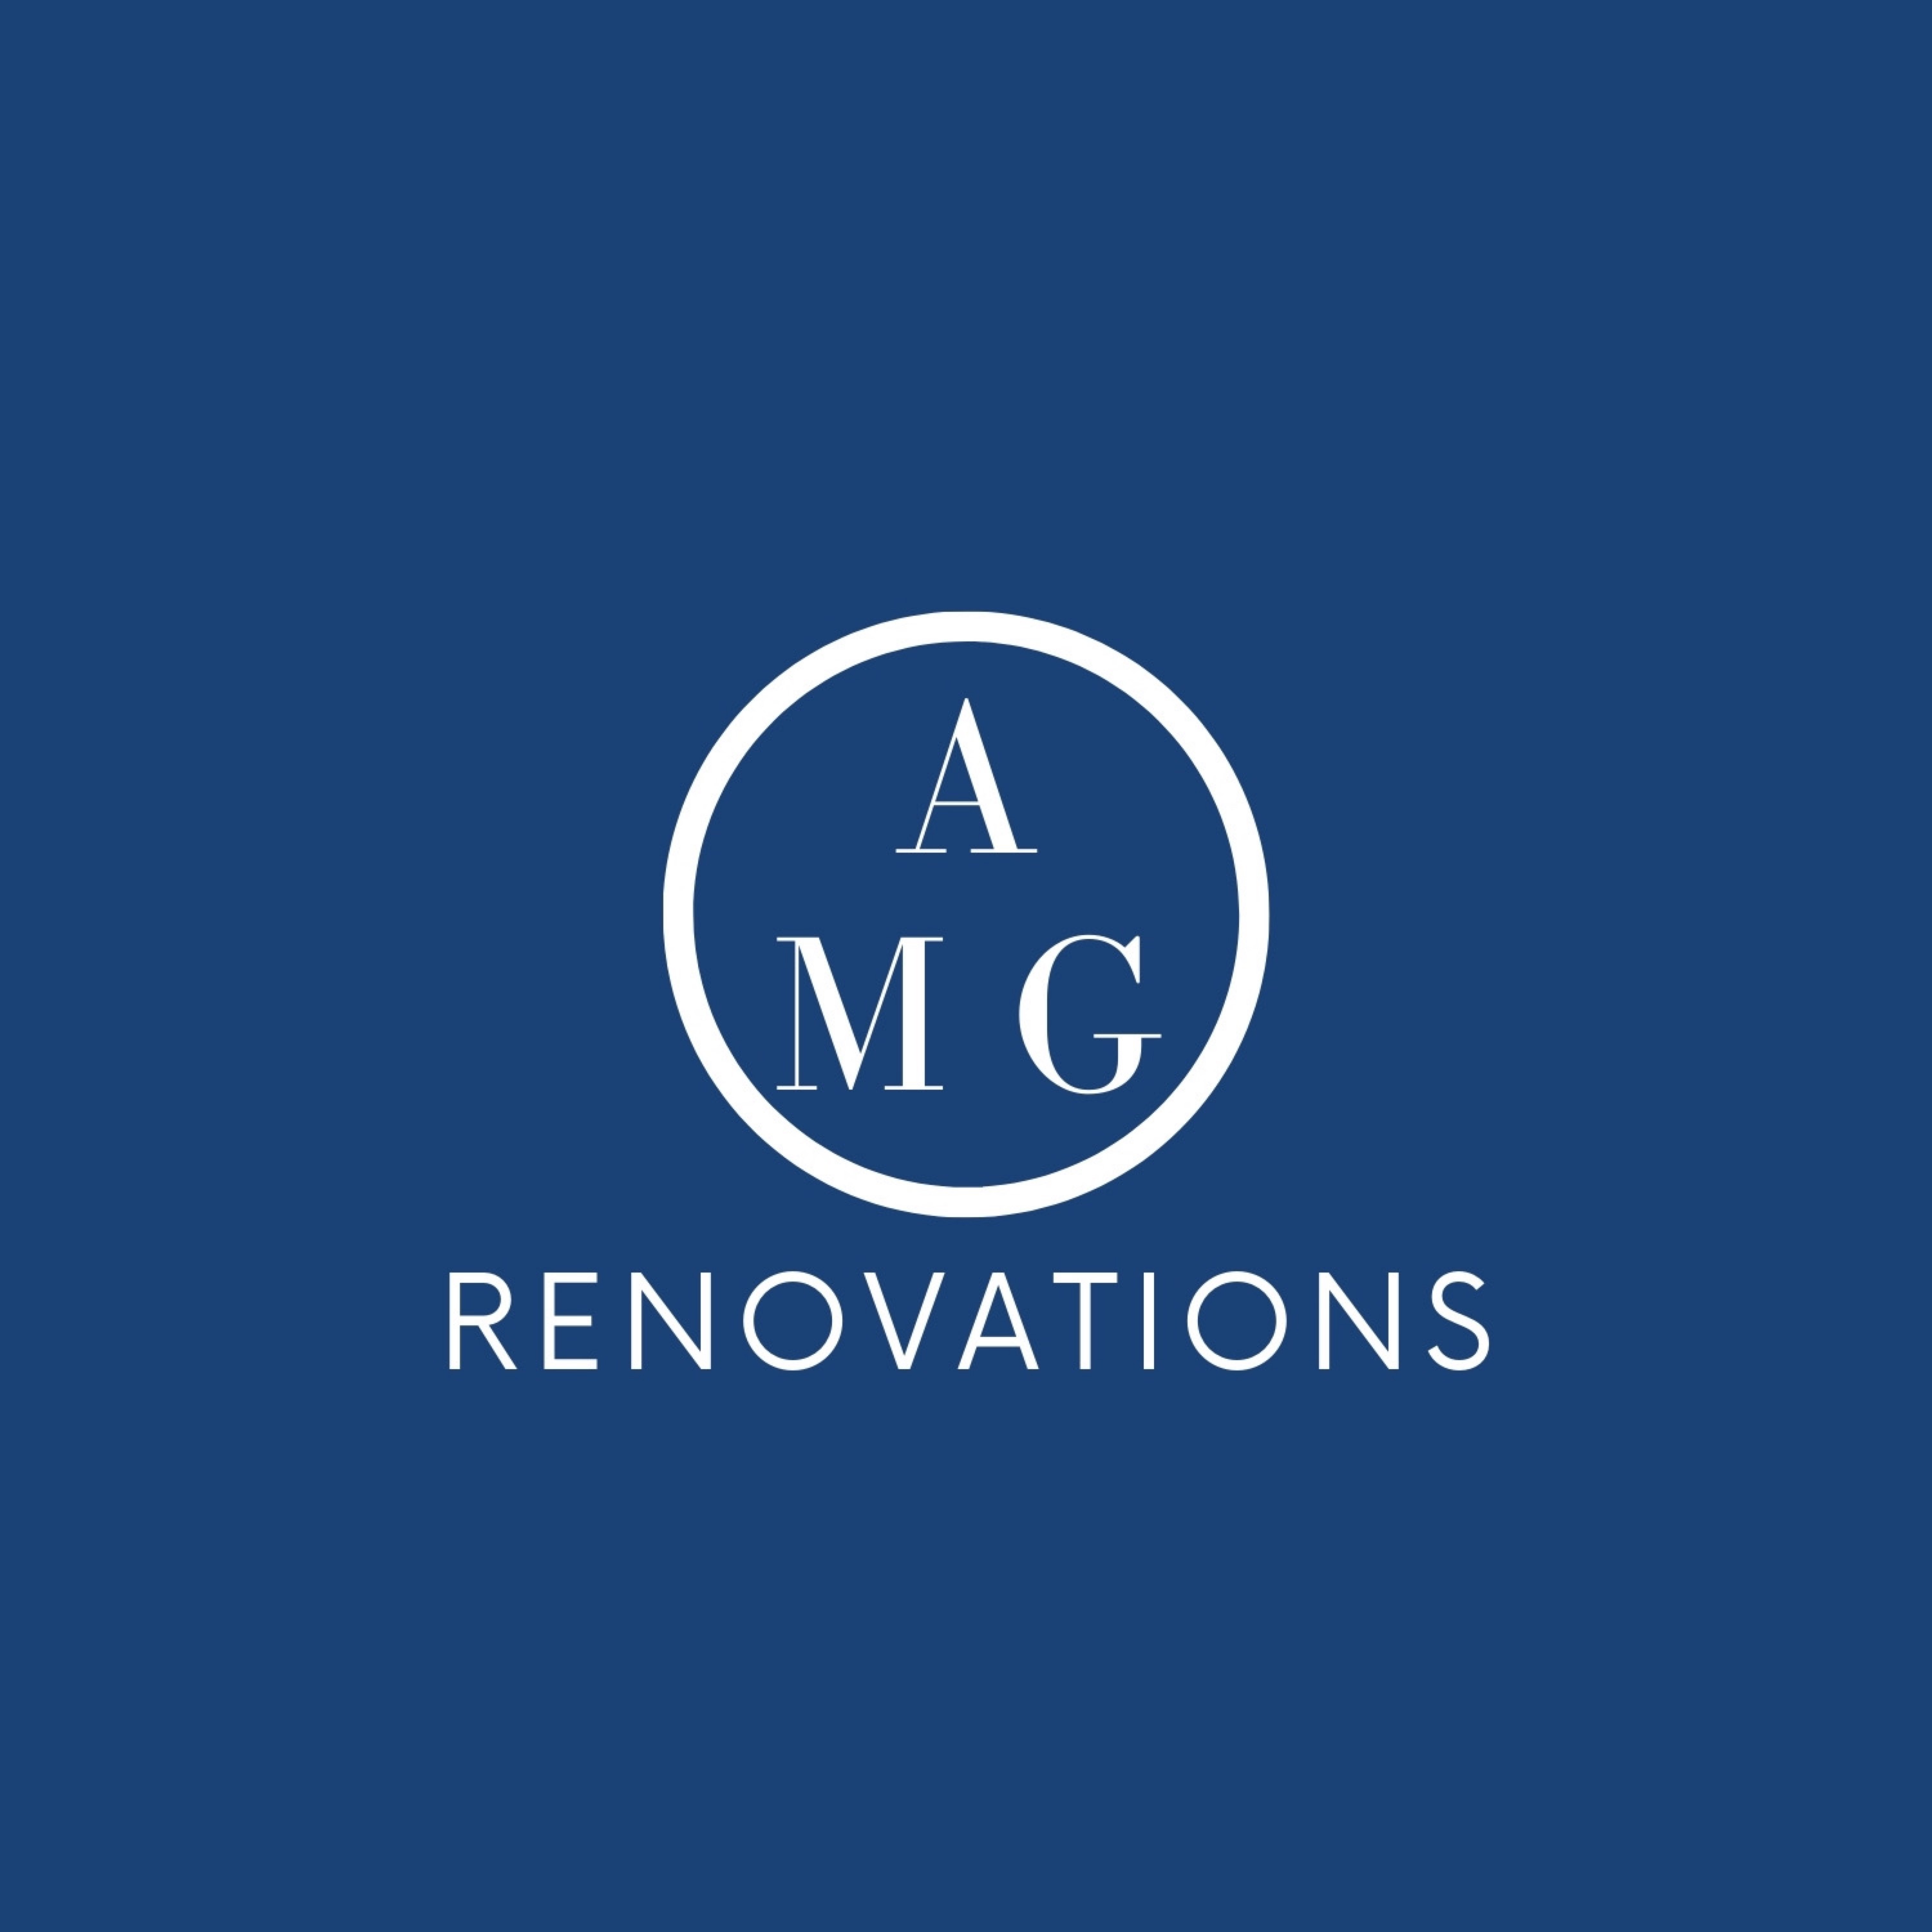 AMG Renovations Logo